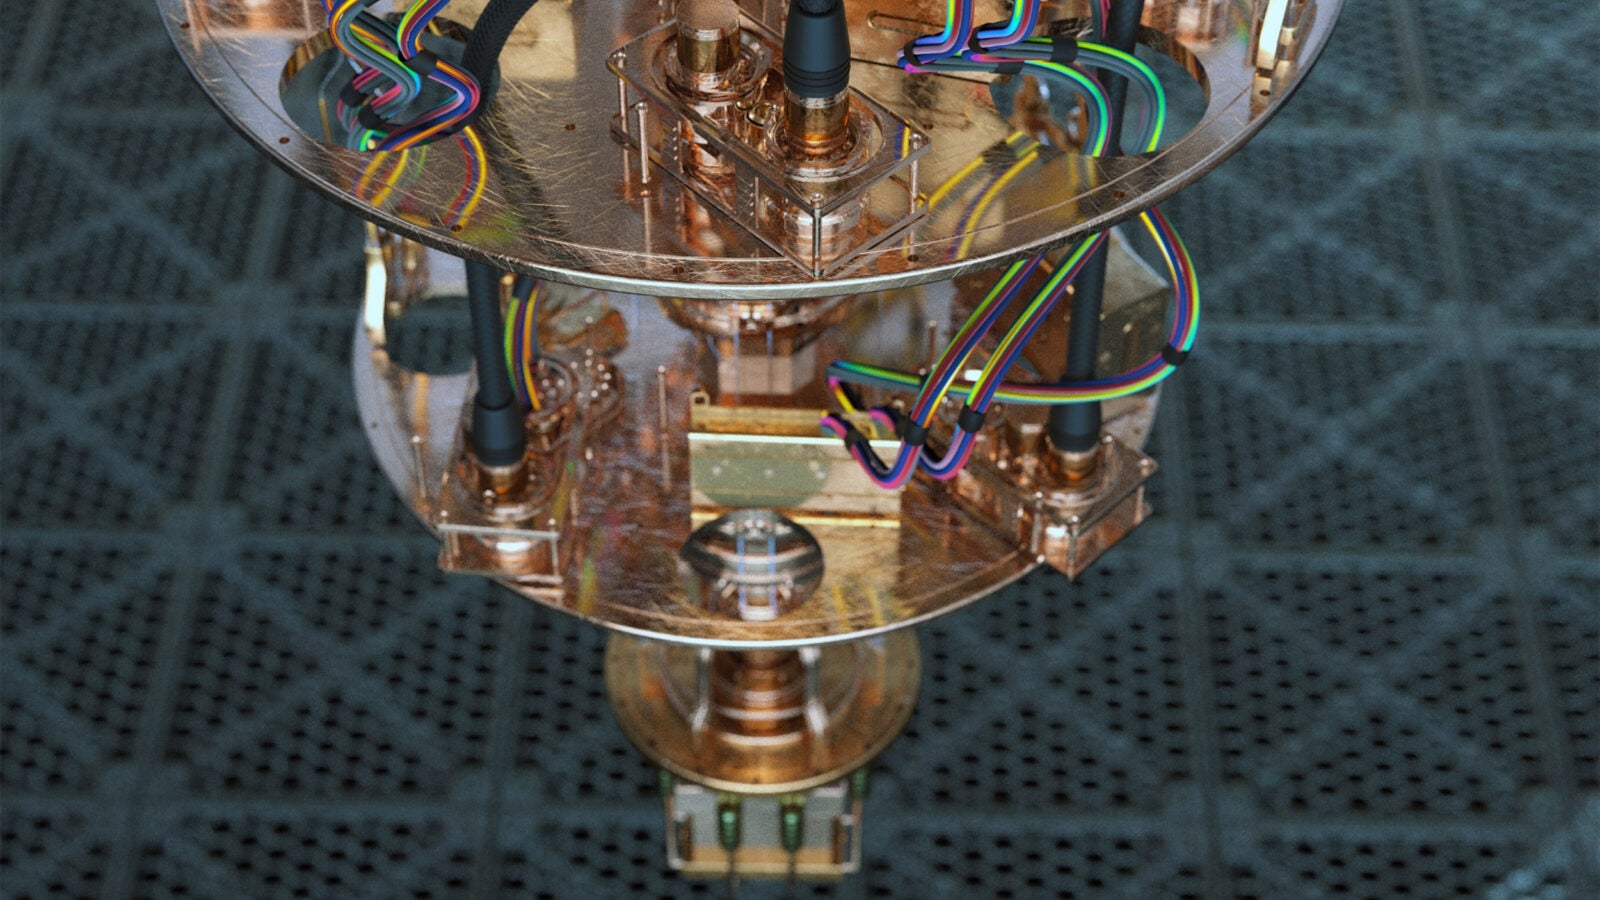 A close up view of a quantum computer.